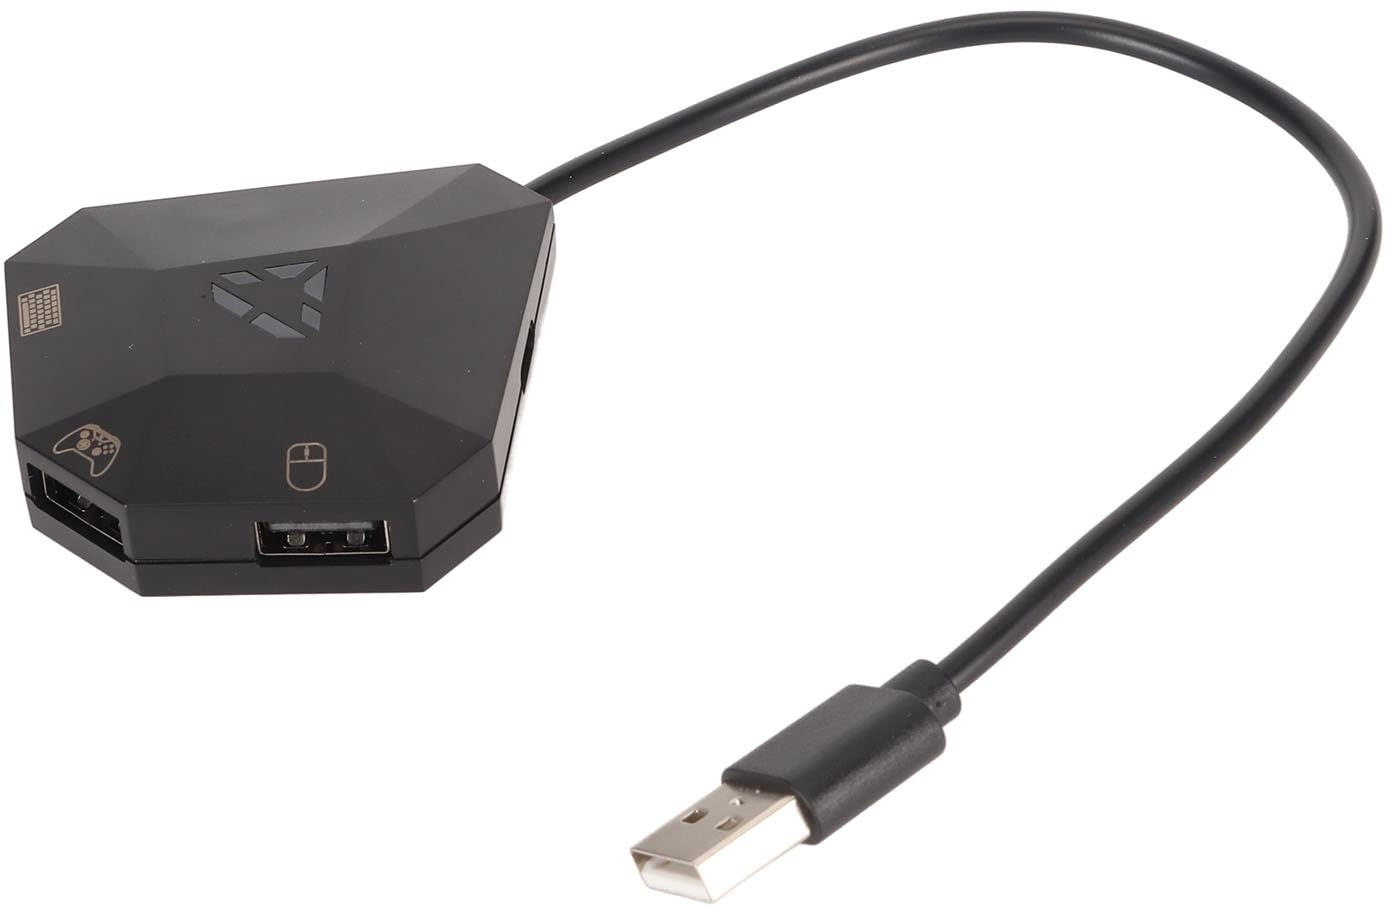 Tastatur-Maus-Adapter für PS4, Individuell Zugeordneter Tastatur-Maus-Konverter, Plug-and-Play-Spielzubehör für PS4 XboxOne PS3 Xbox360 Tastatur-Maus